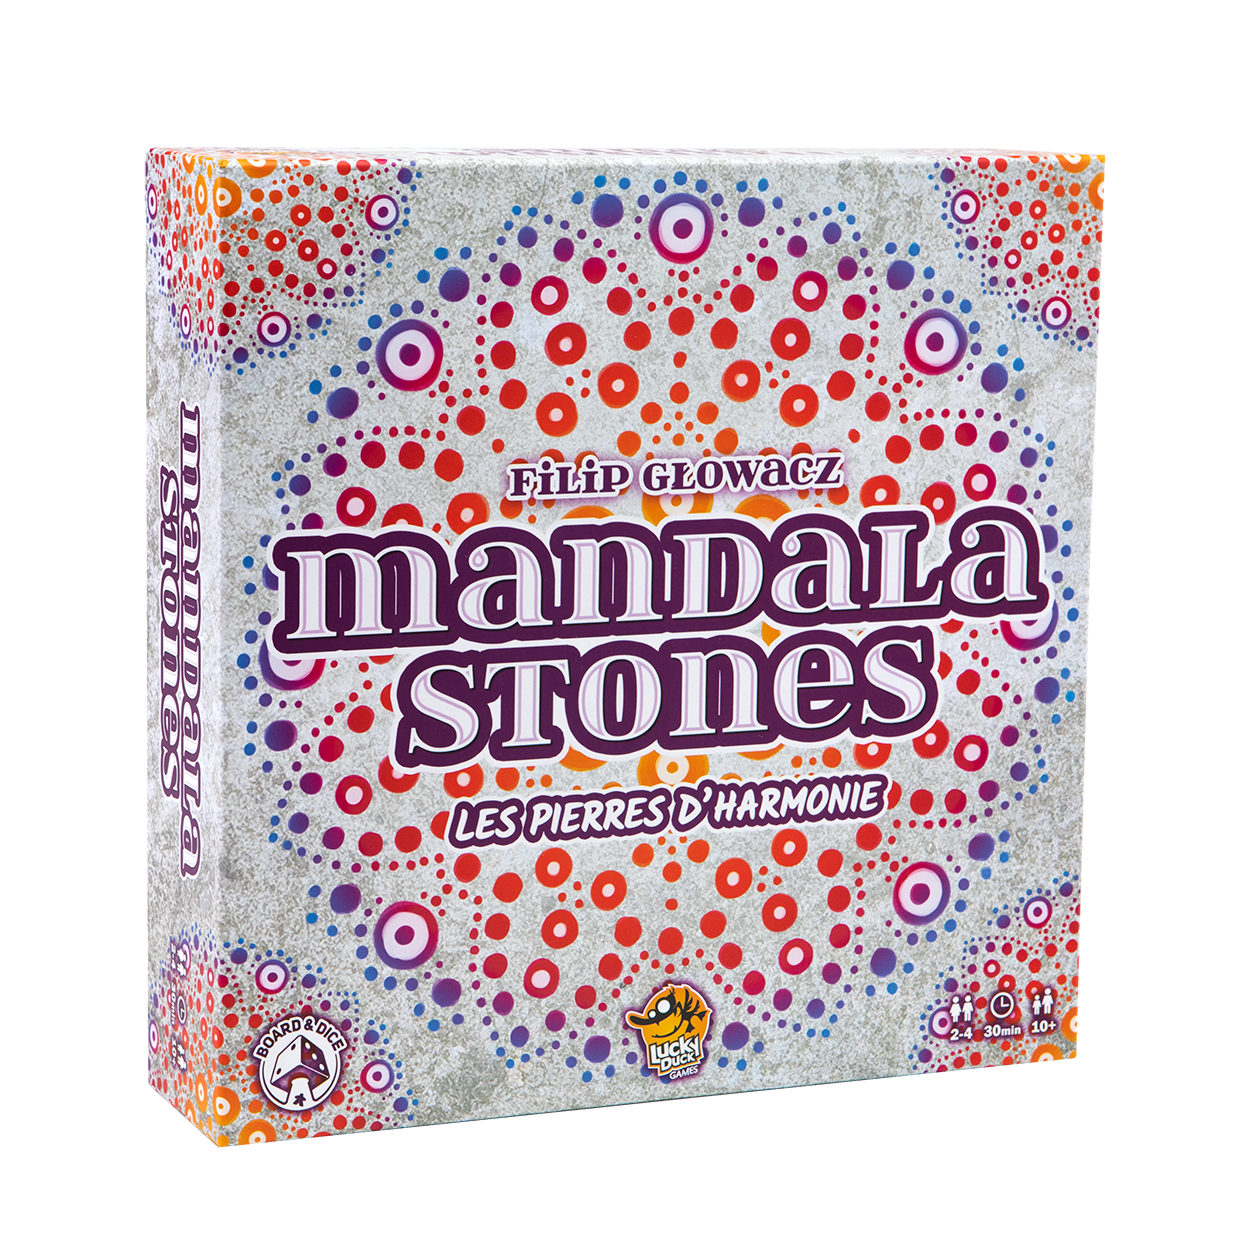 Mandala Stones version française